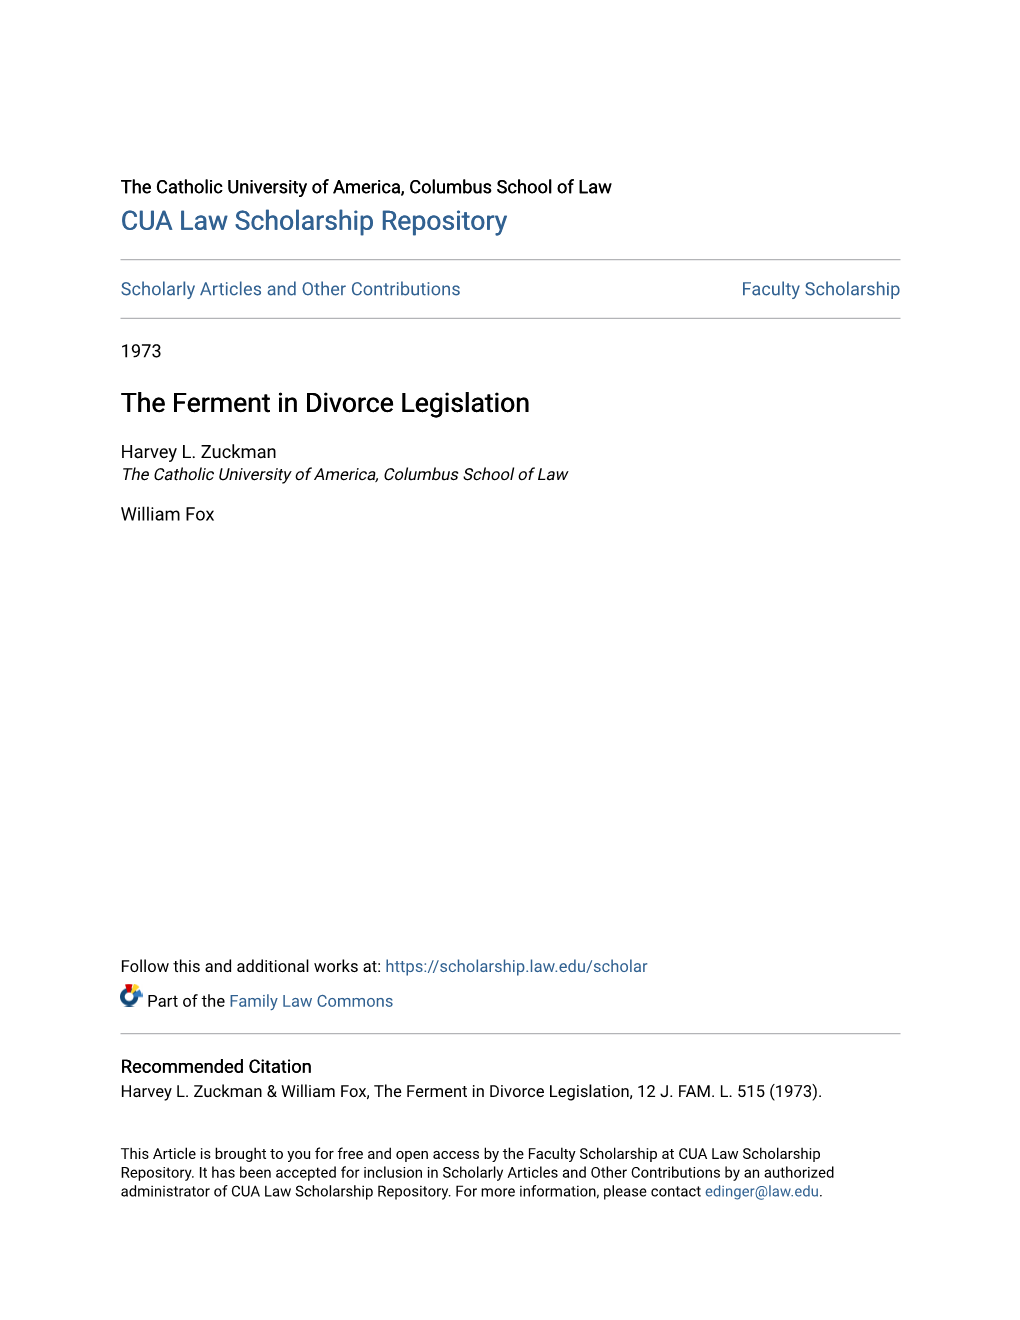 The Ferment in Divorce Legislation